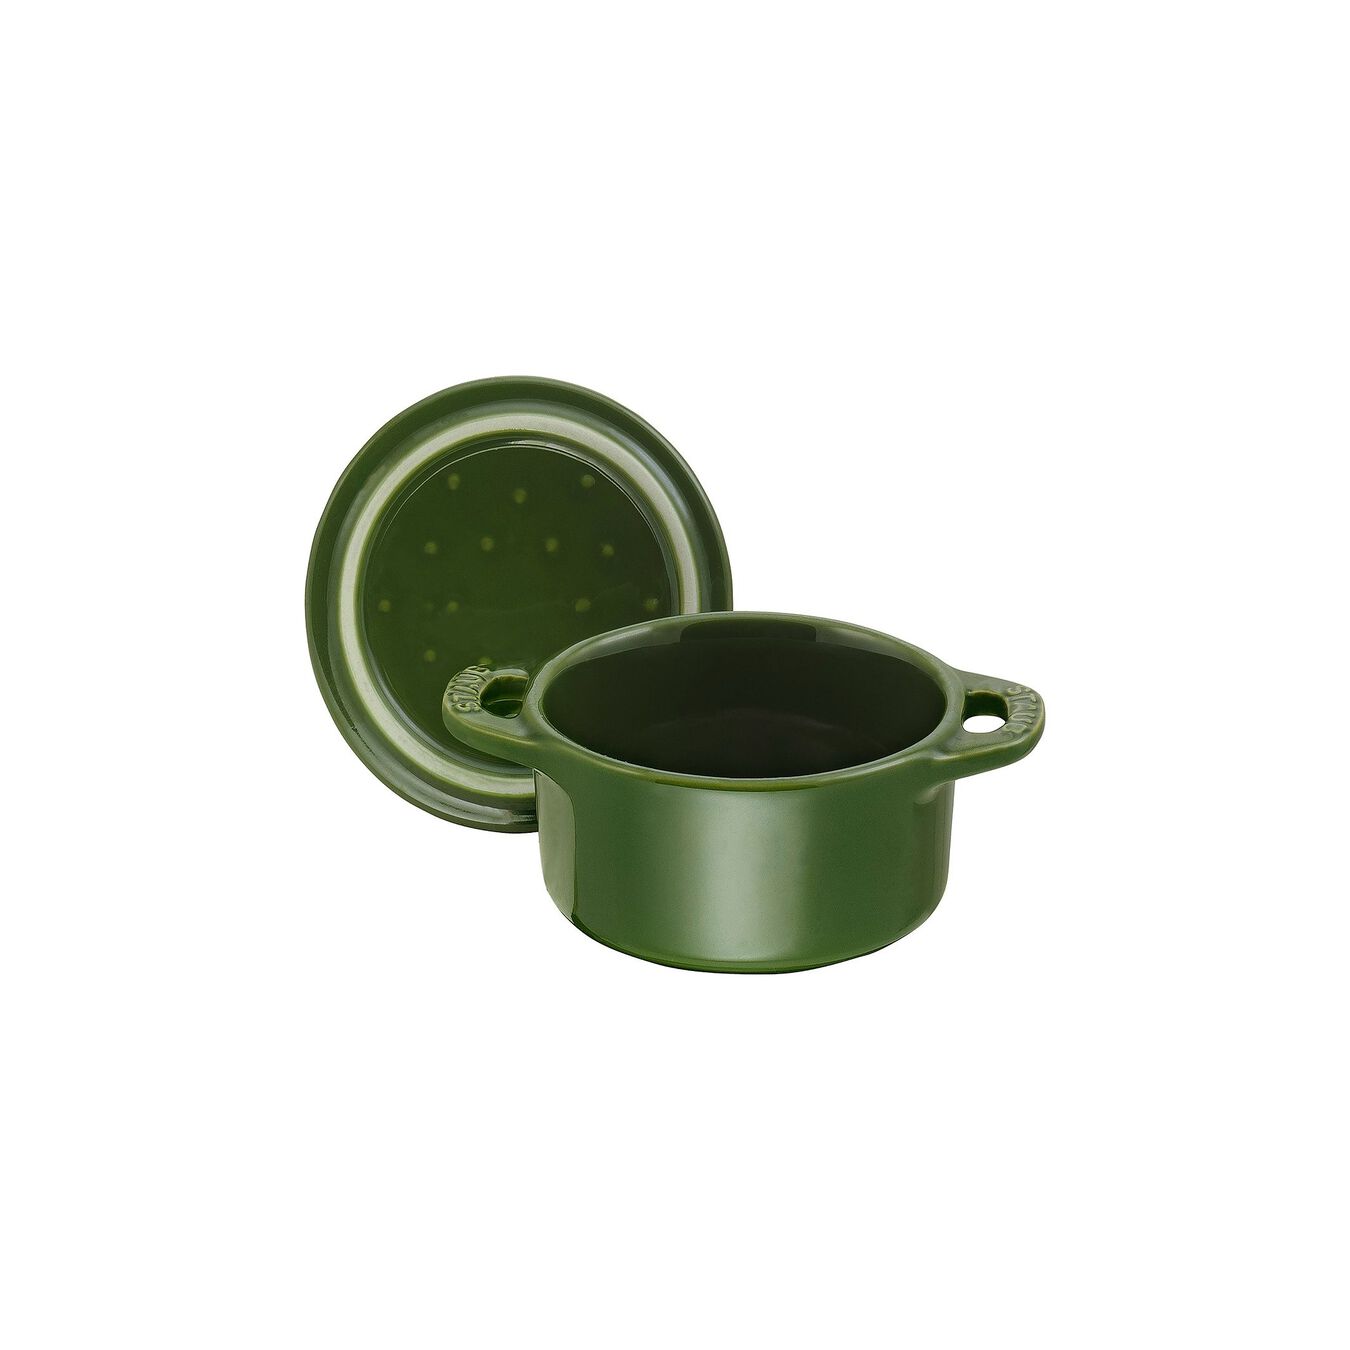 10 cm round Ceramic Mini Cocotte basil-green,,large 2